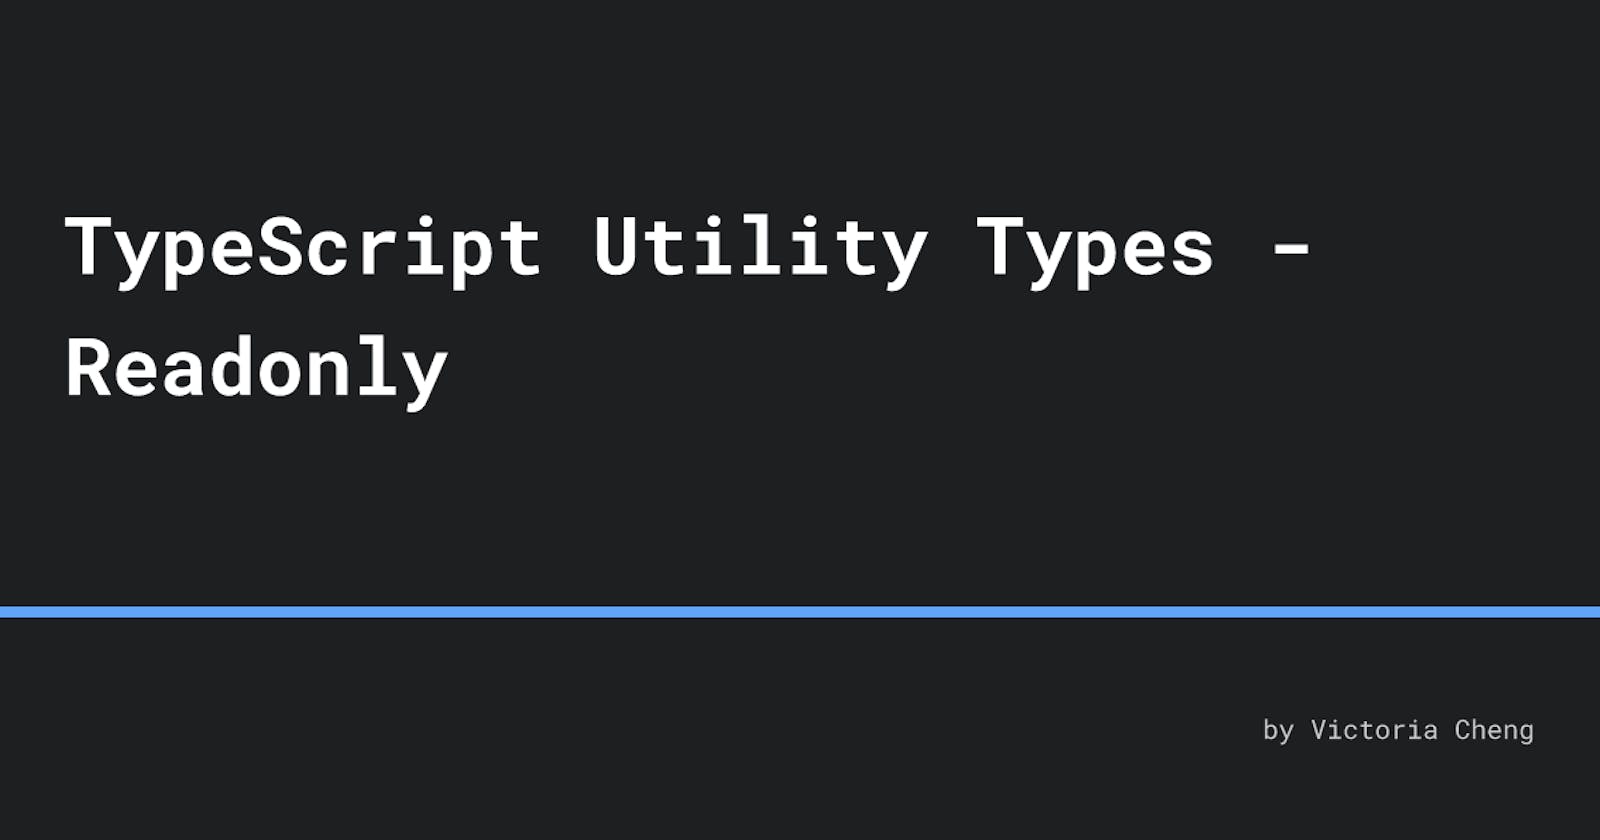 TypeScript Utility Types - Readonly